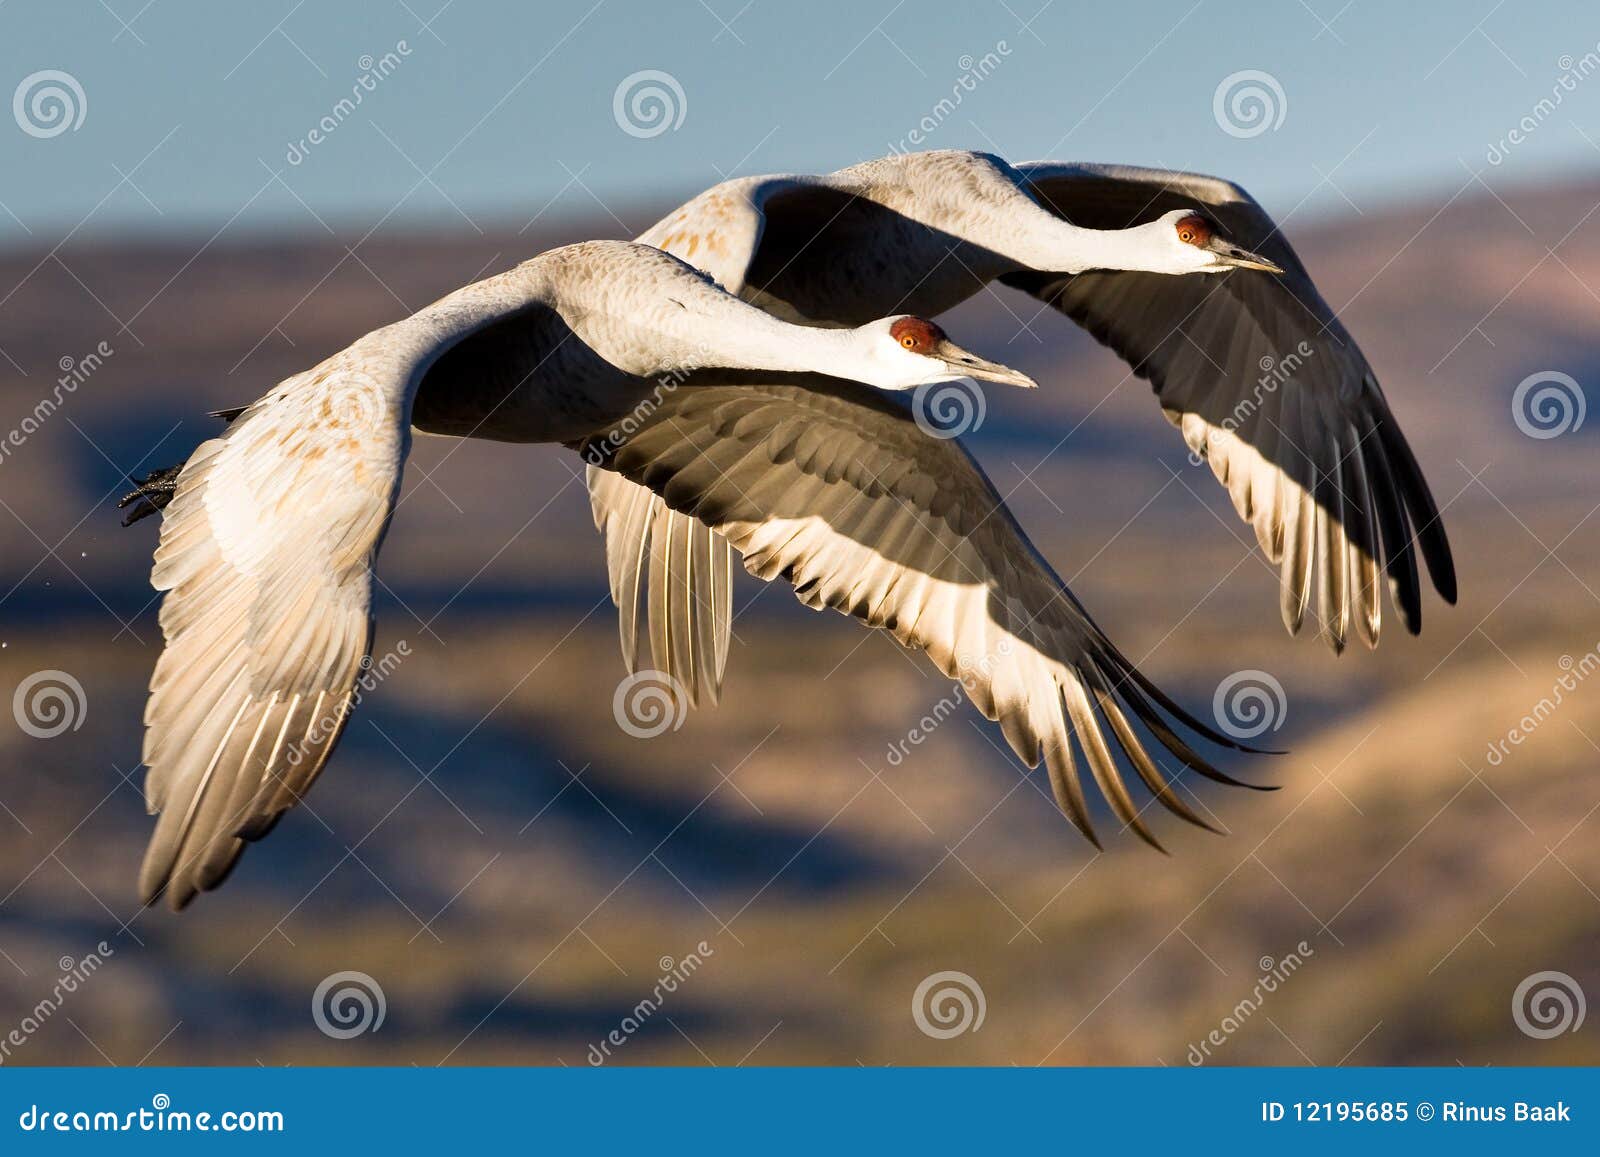 sandhill cranes in flight